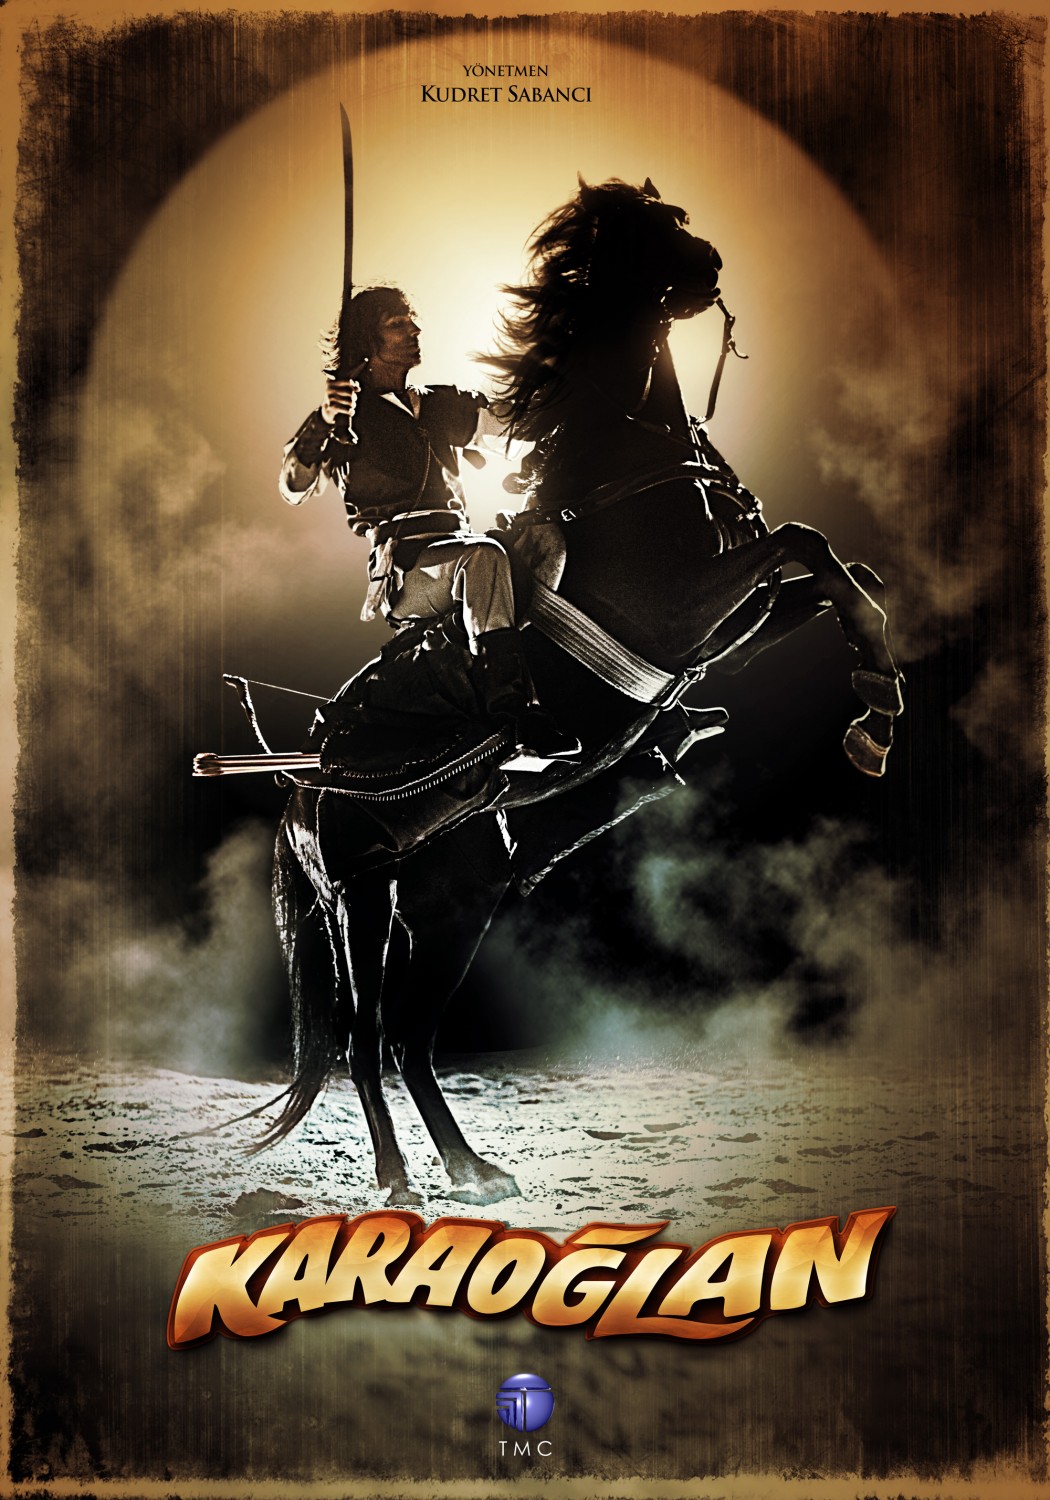 Extra Large Movie Poster Image for Karaoglan (#1 of 5)